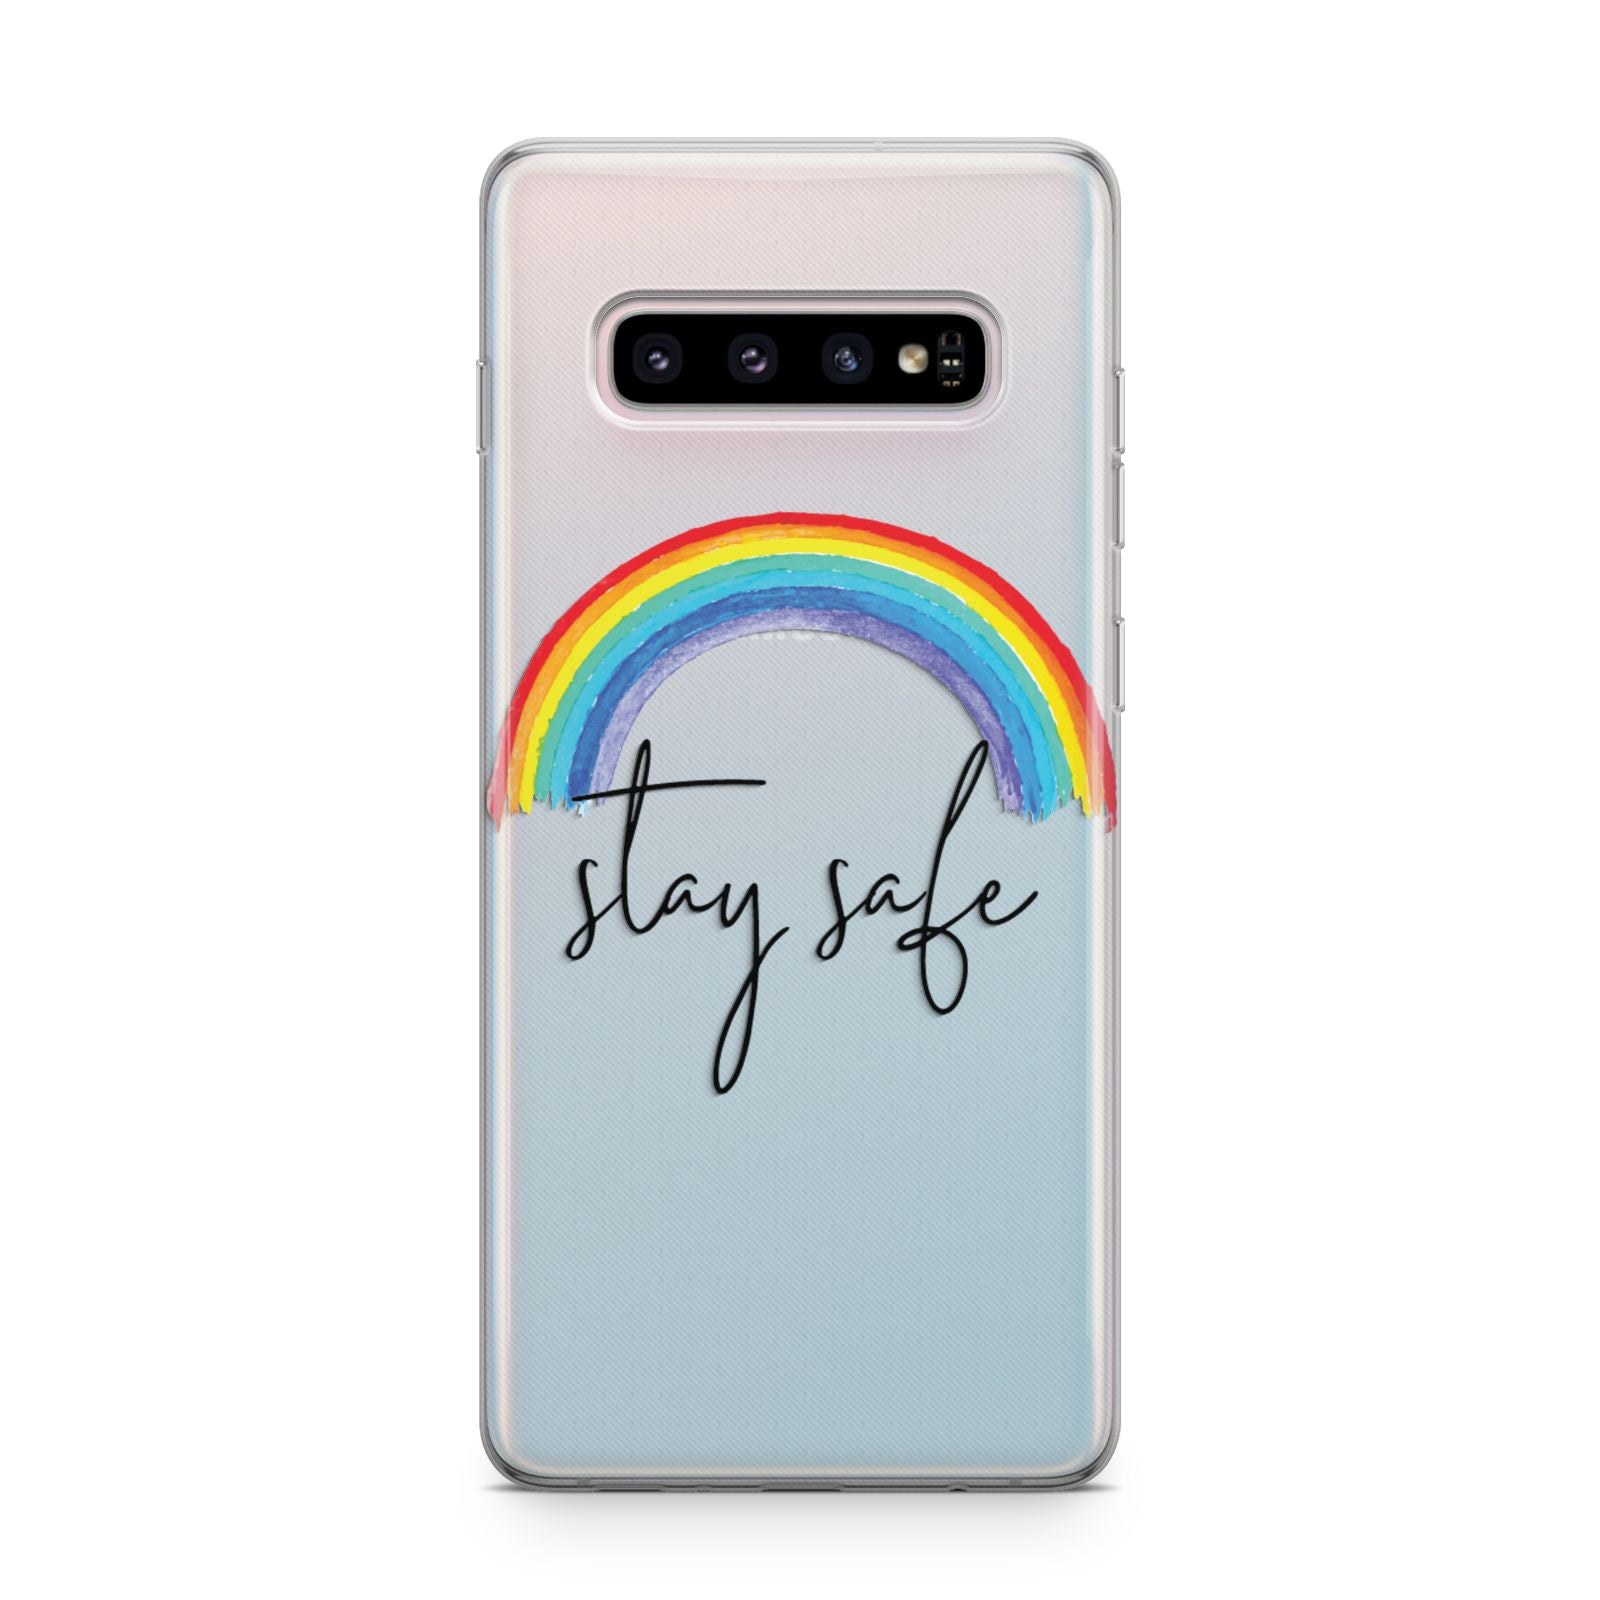 Stay Safe Rainbow Samsung Galaxy S10 Plus Case